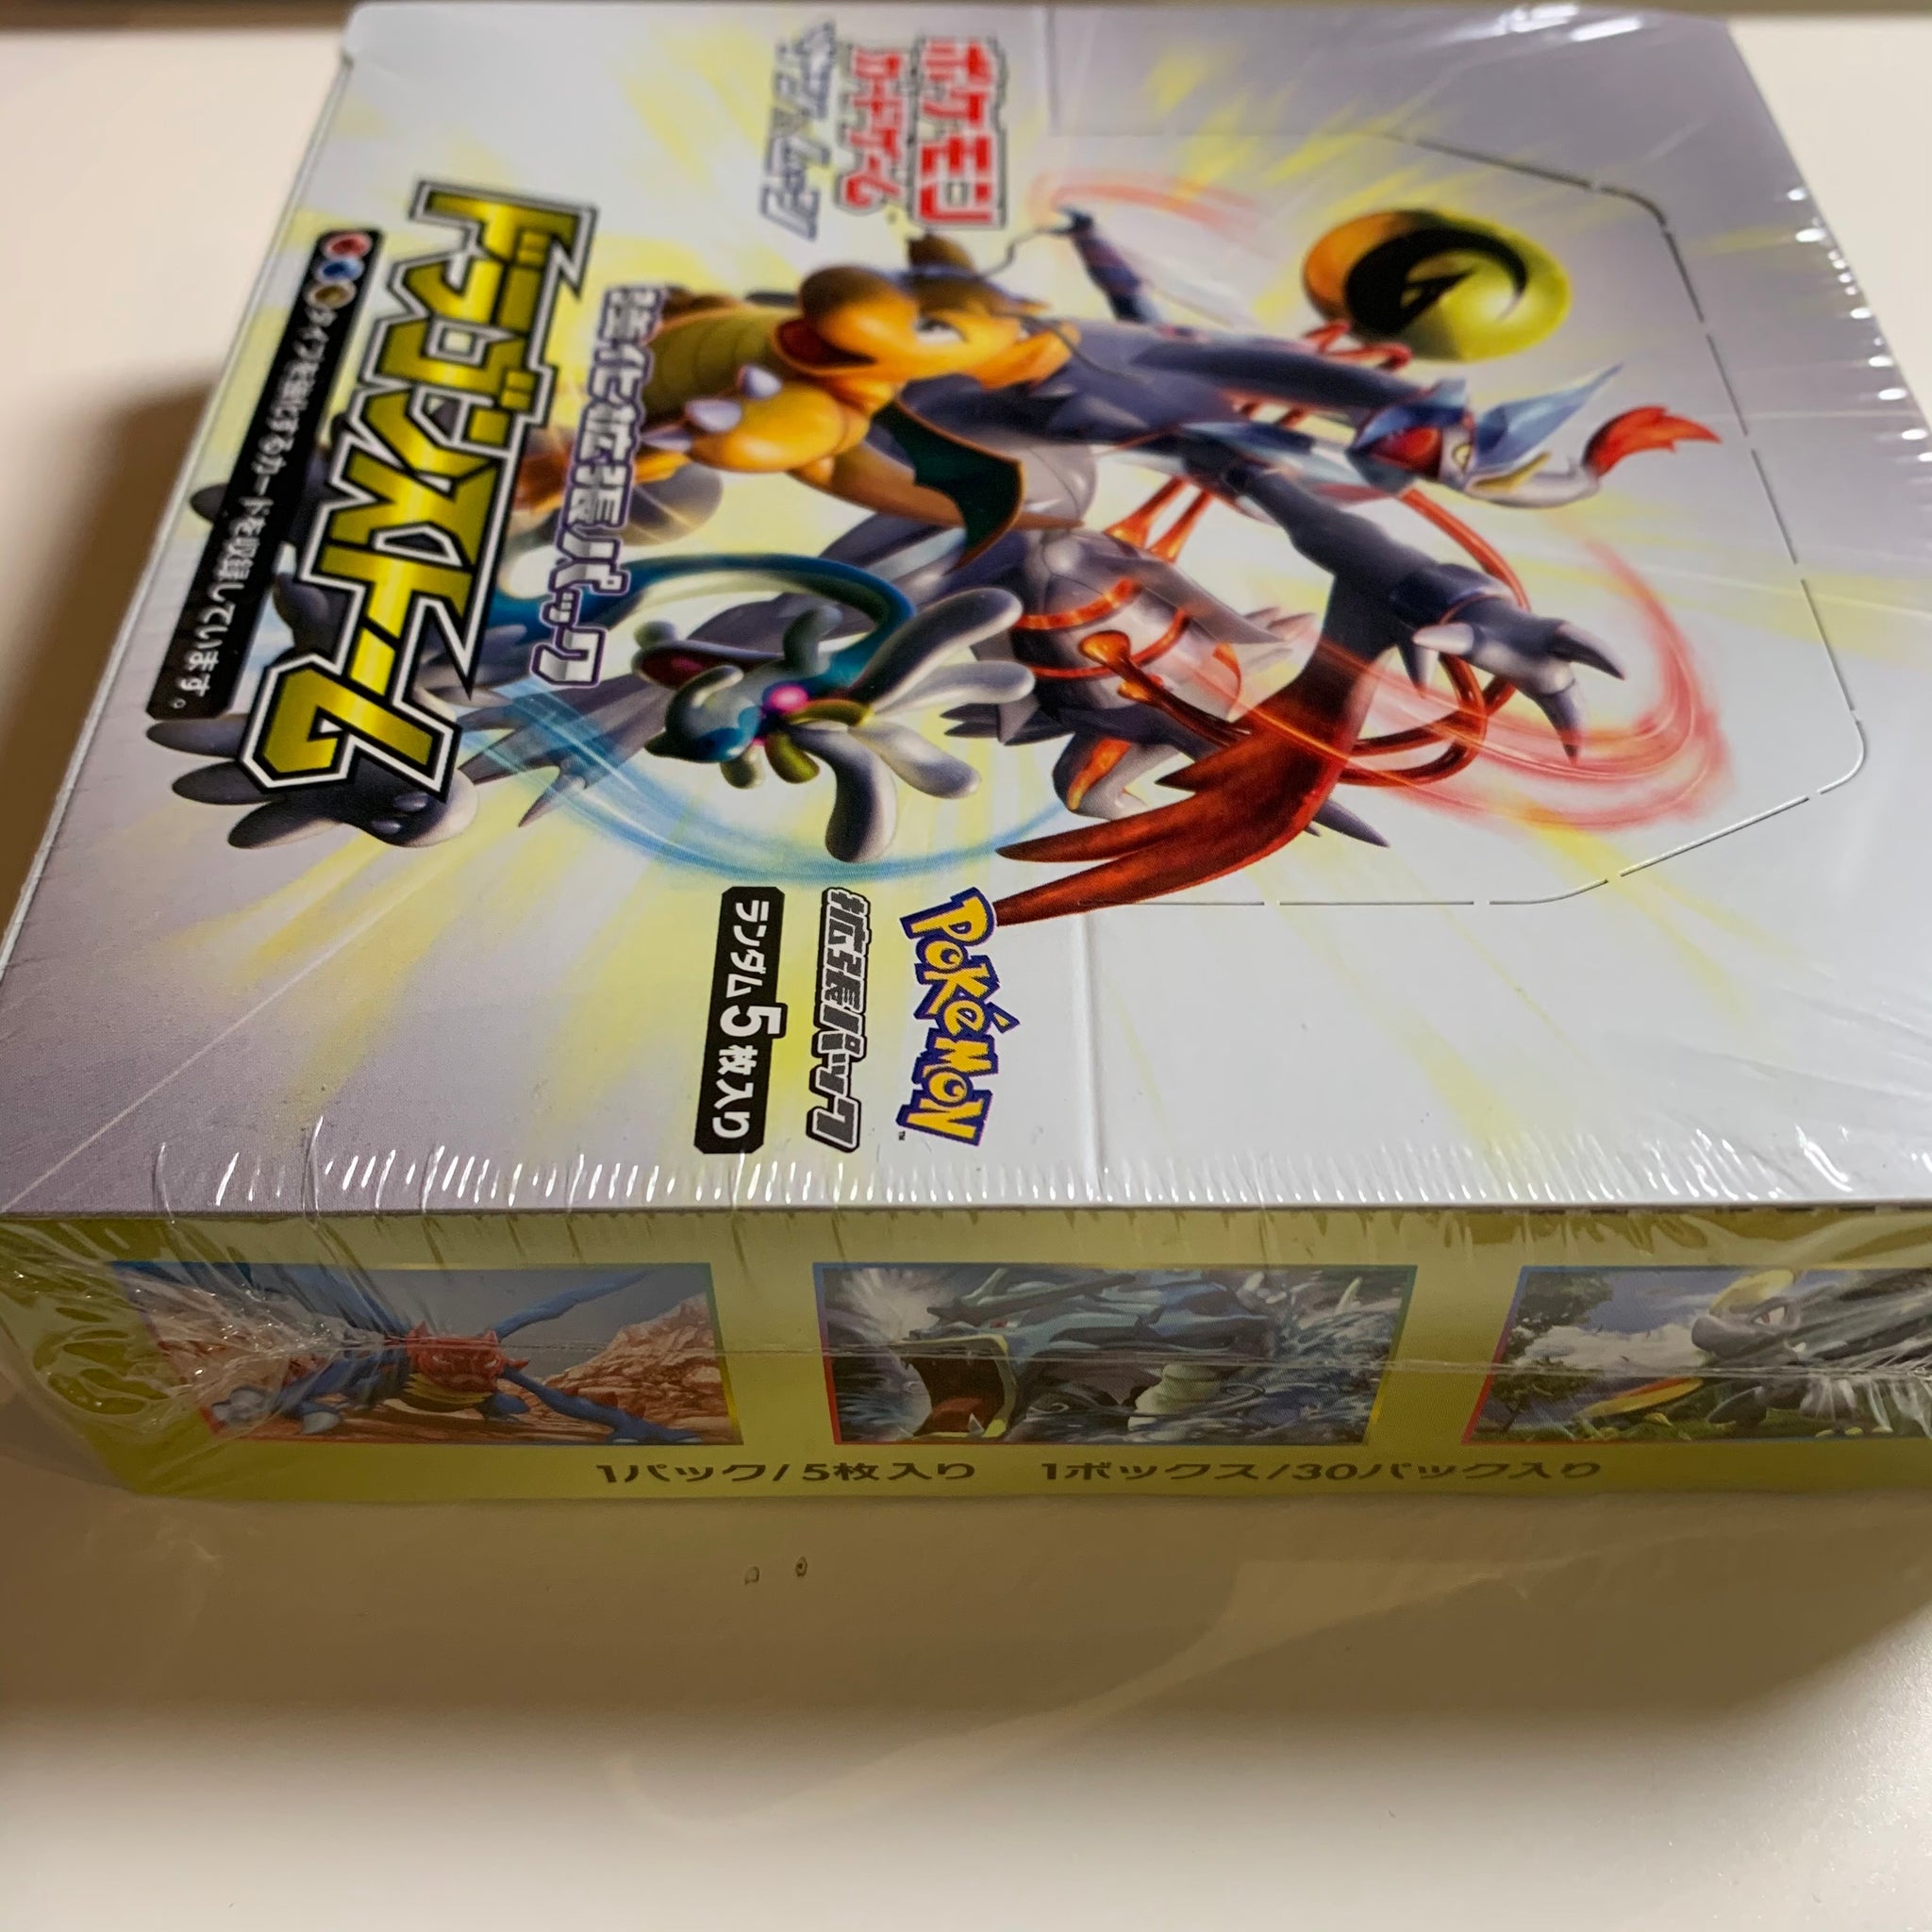  Pokemon Sun Moon Reinforced Expansion Pack Dragon Storm Box :  Toys & Games